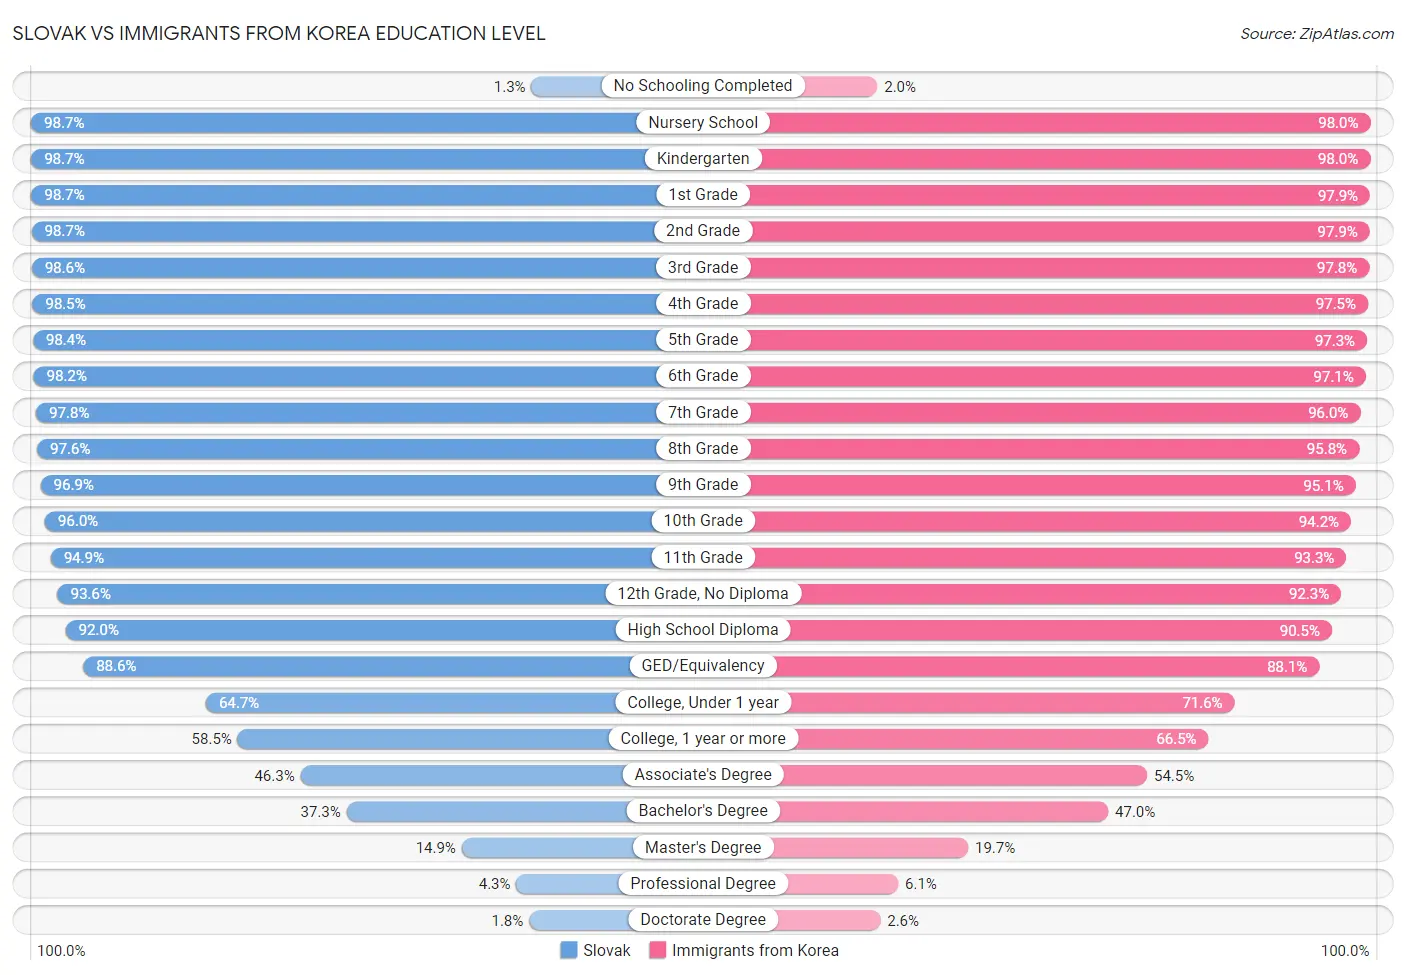 Slovak vs Immigrants from Korea Education Level